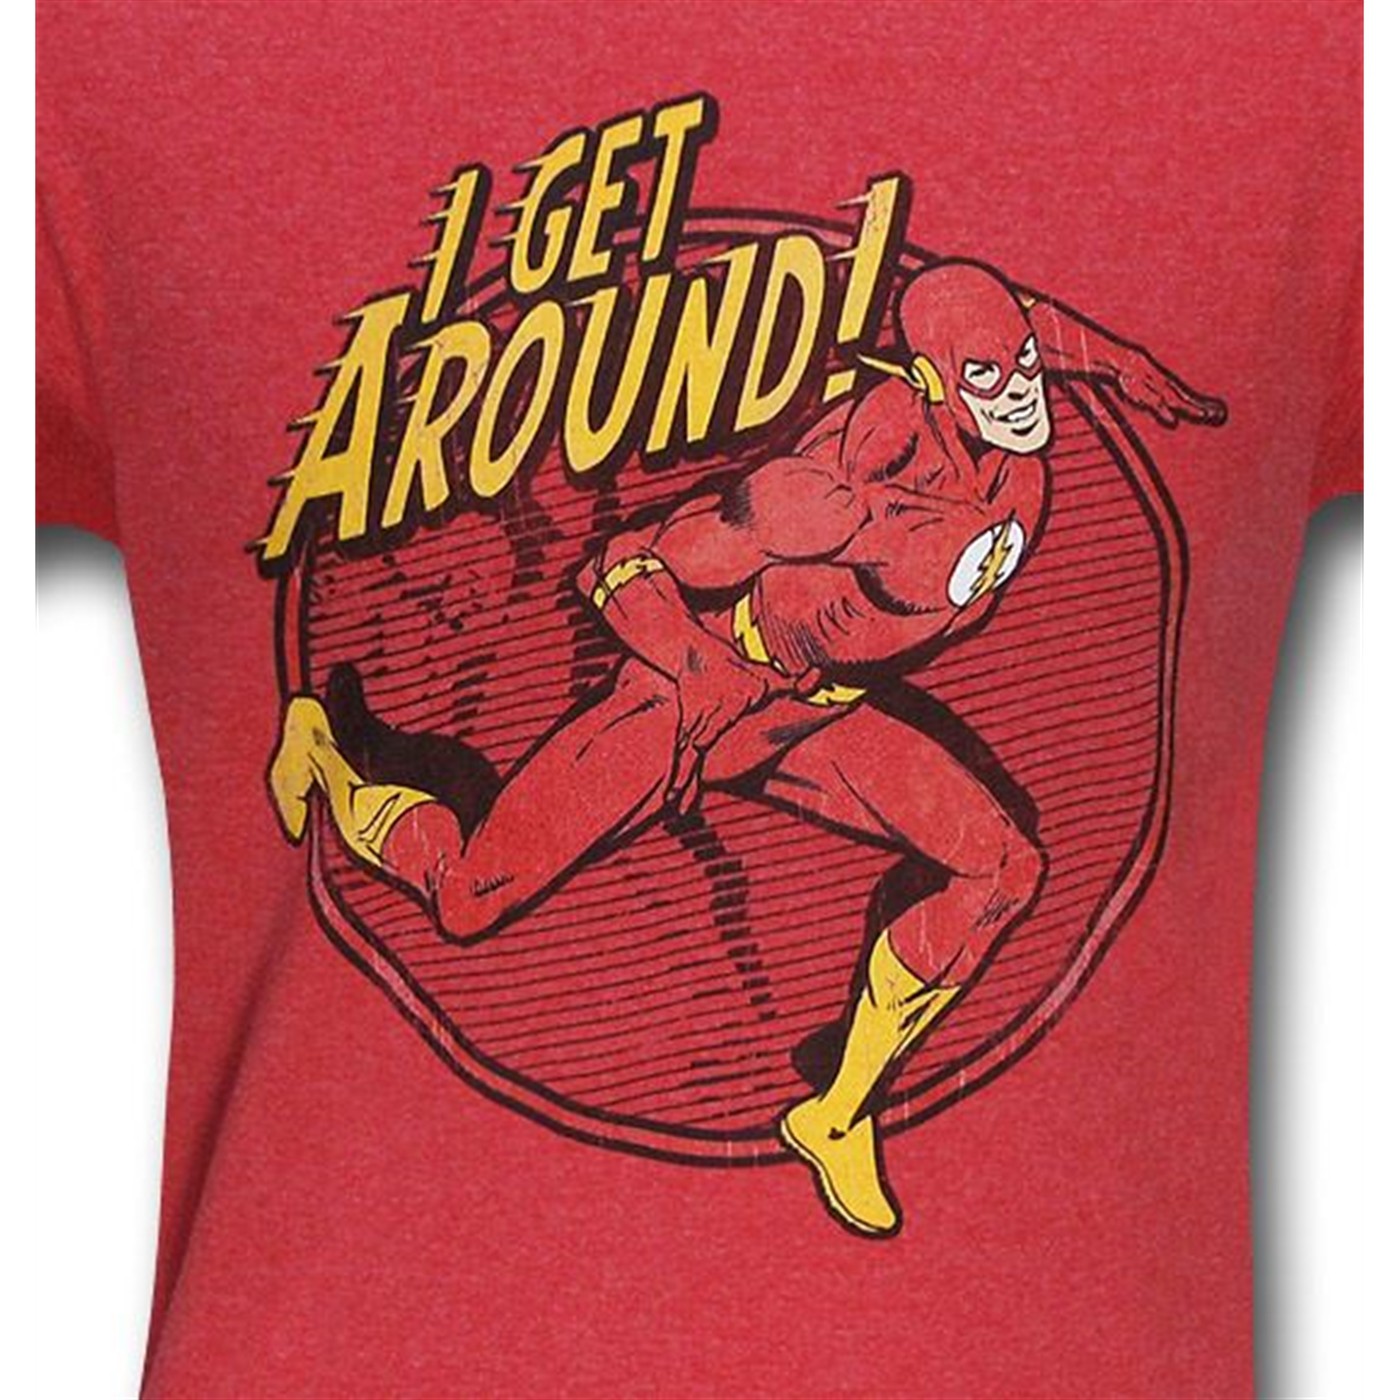 Flash "I Get Around" T-Shirt